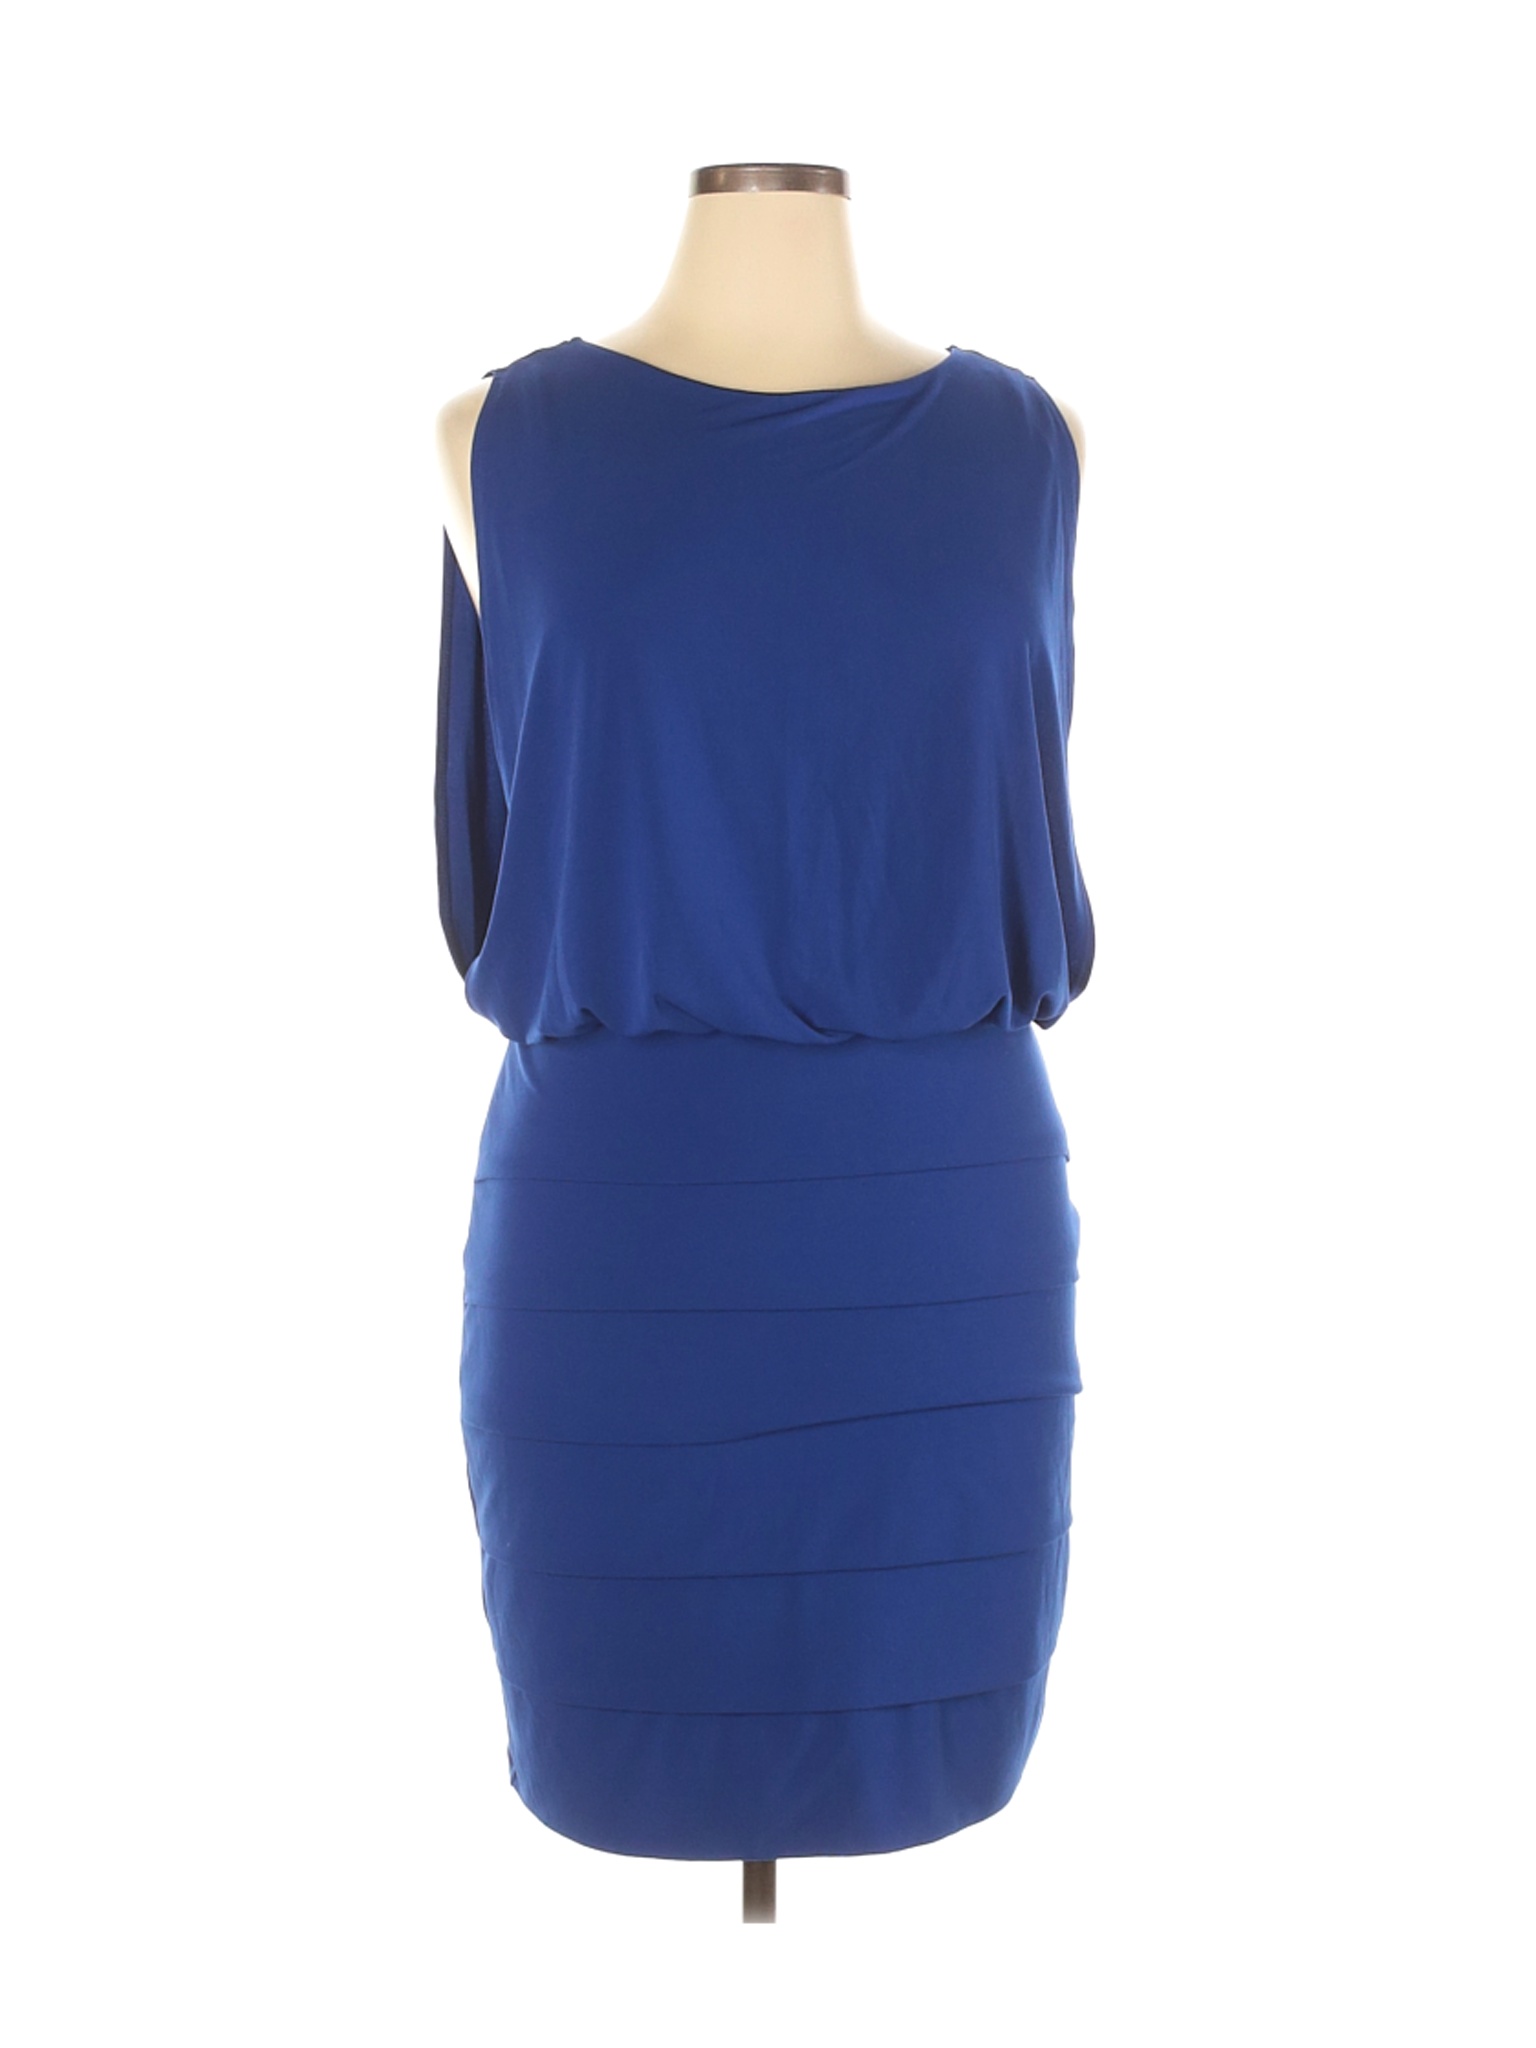 Valerie Bertinelli Women Blue Cocktail Dress 14 | eBay